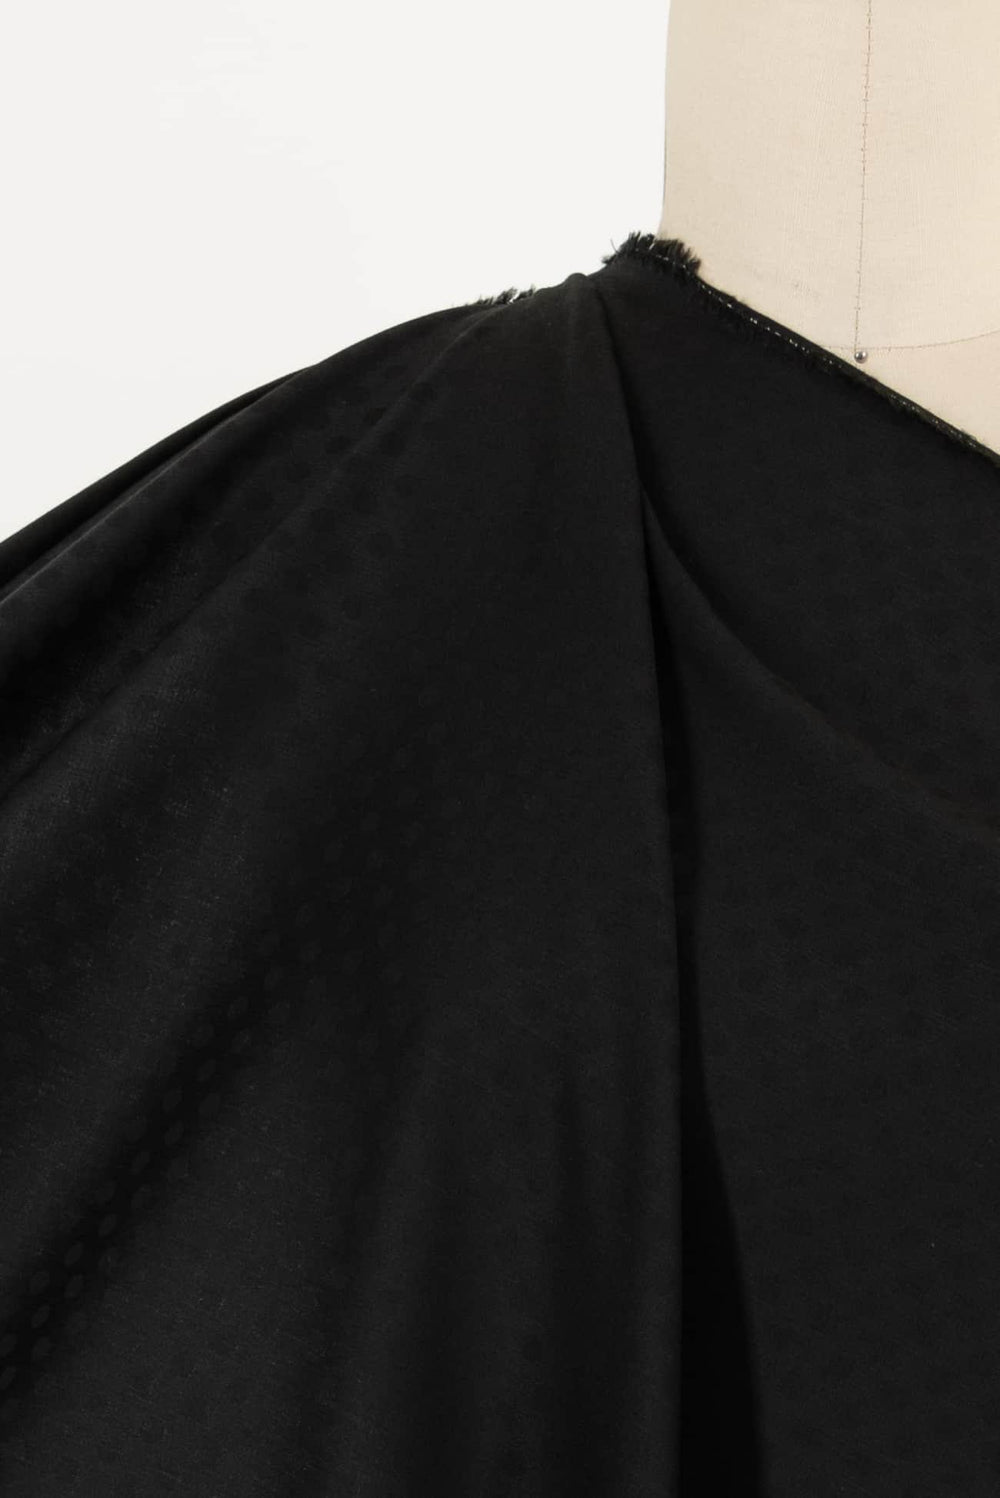 Japanese Wovens | Marcy Tilton | Online Fabric Store – Marcy Tilton Fabrics